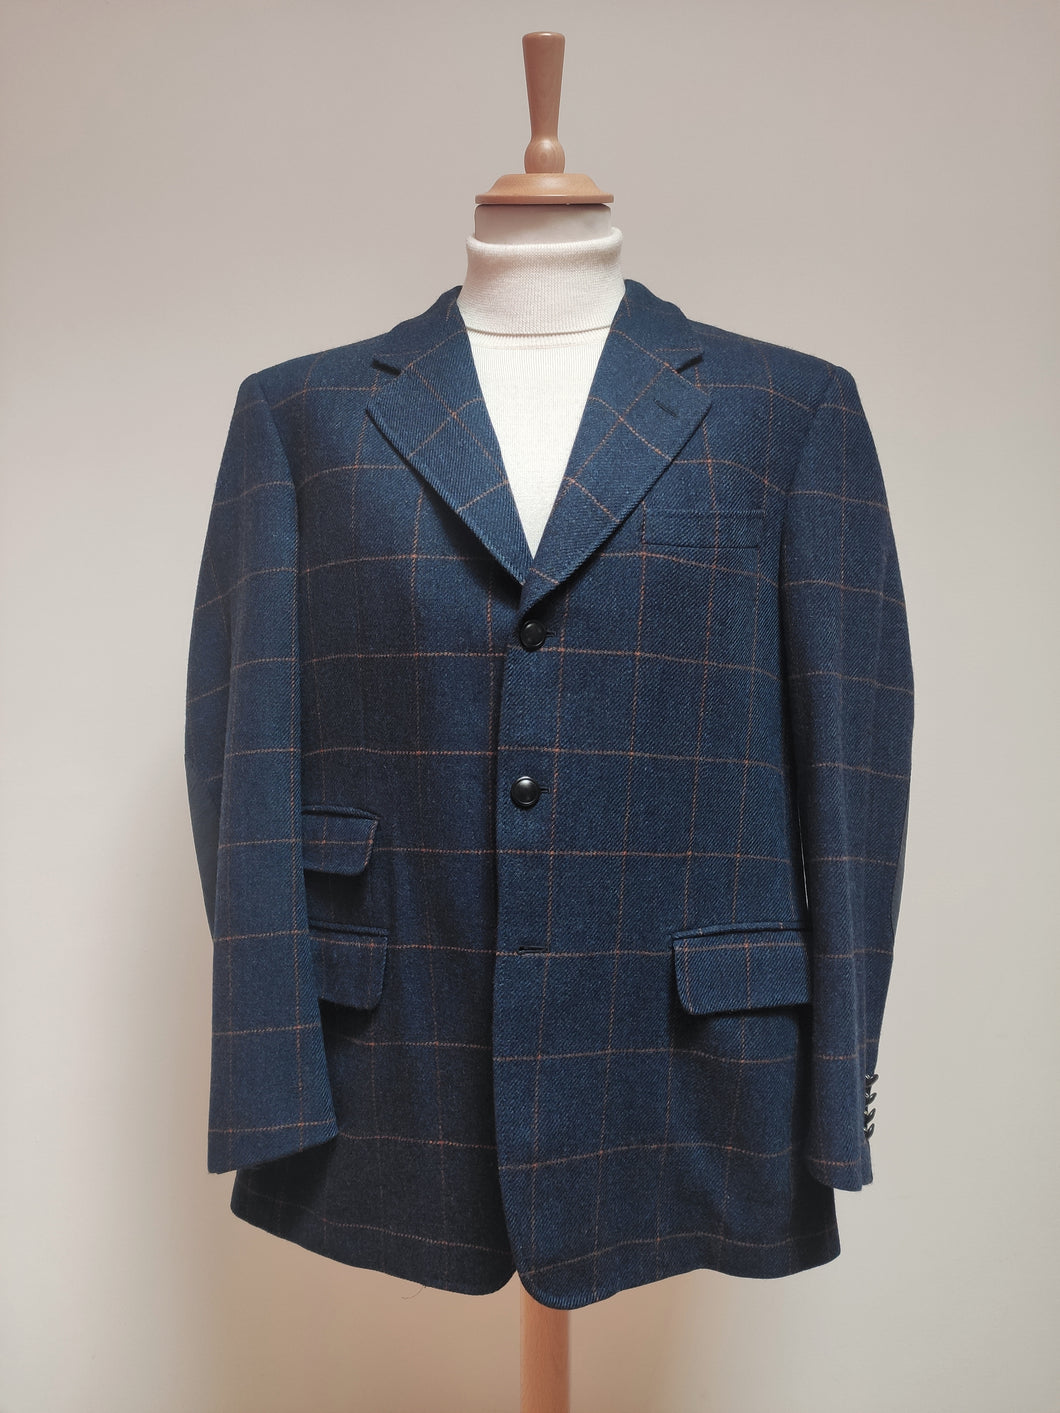 Harris Tweed X Maxim's blazer à carreaux fenêtre en pure laine 52 Made in Italy